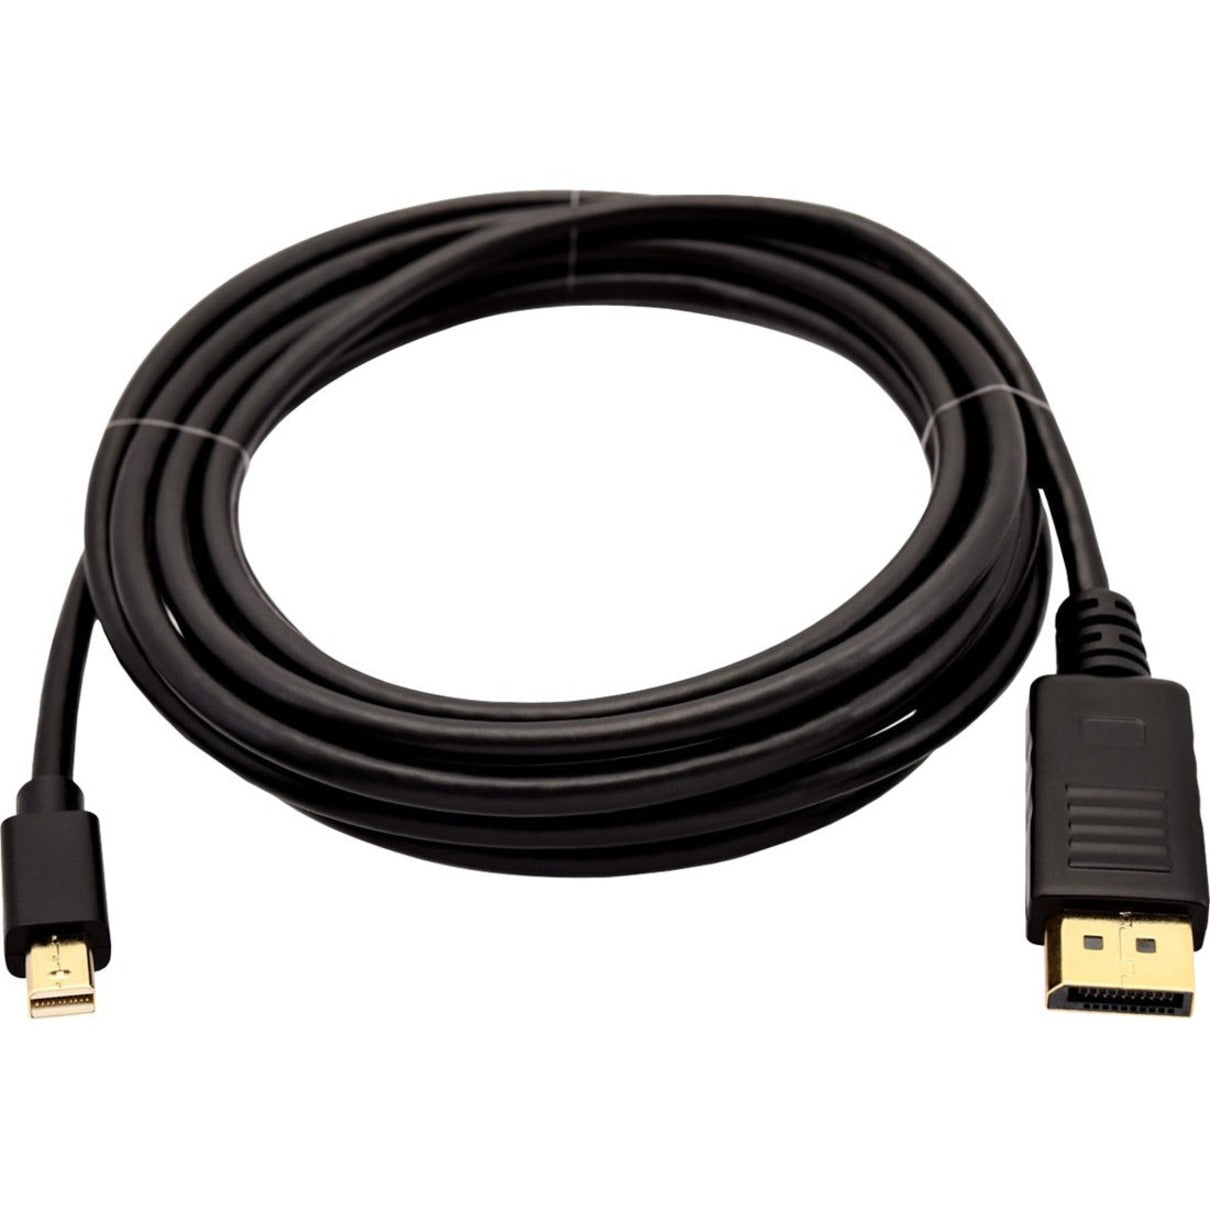 V7 Black Video Cable - Mini DisplayPort to DisplayPort - 3m 10ft [Discontinued]